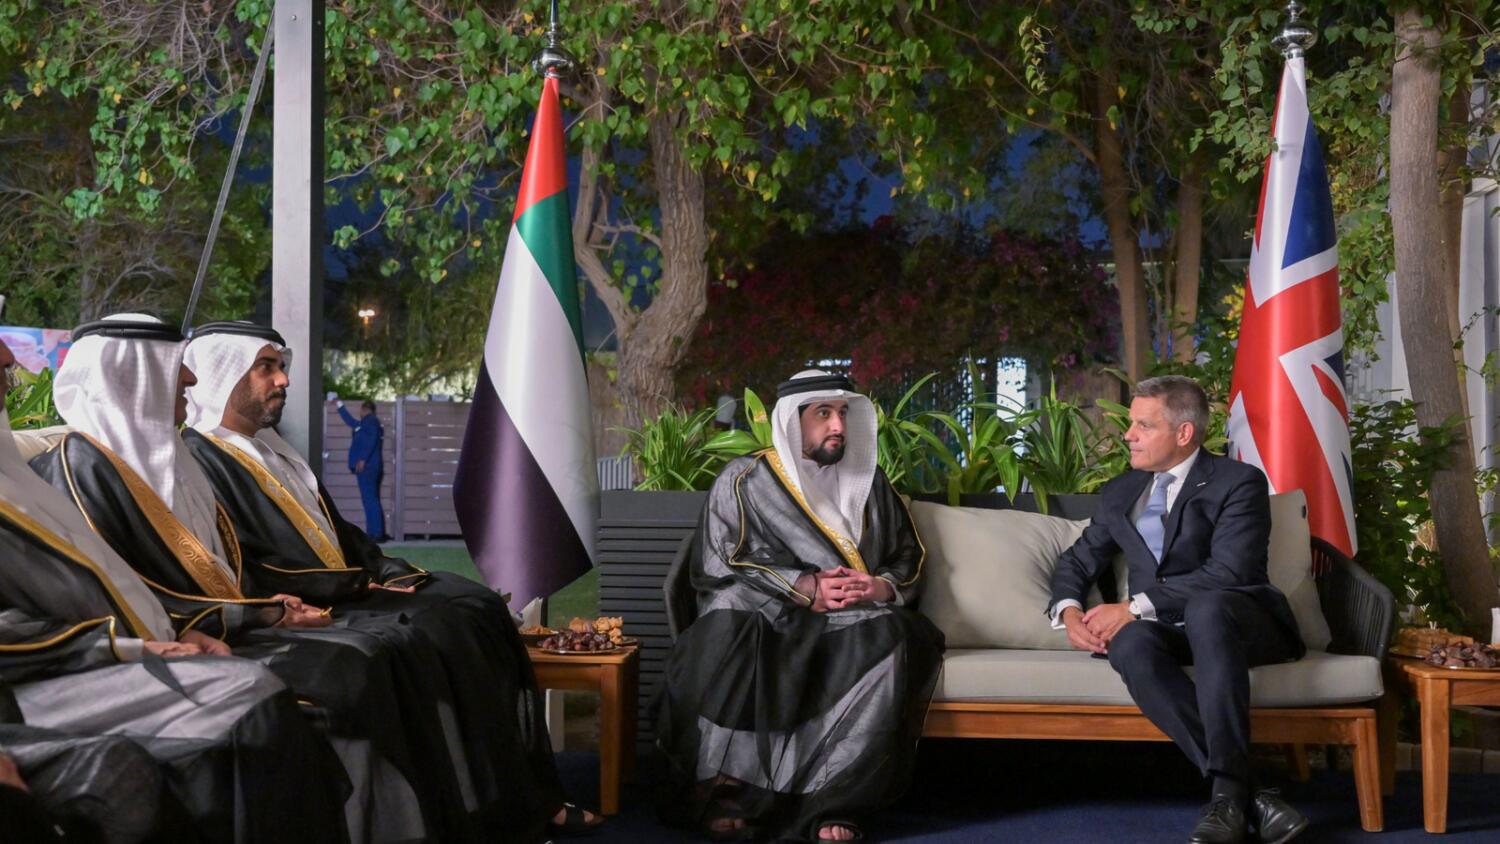 Sheikh Ahmed bin Mohammed bin Rashid Al Maktoum at the reception hosted by the British Embassy in Dubai to celebrate the Coronation of King Charles III.